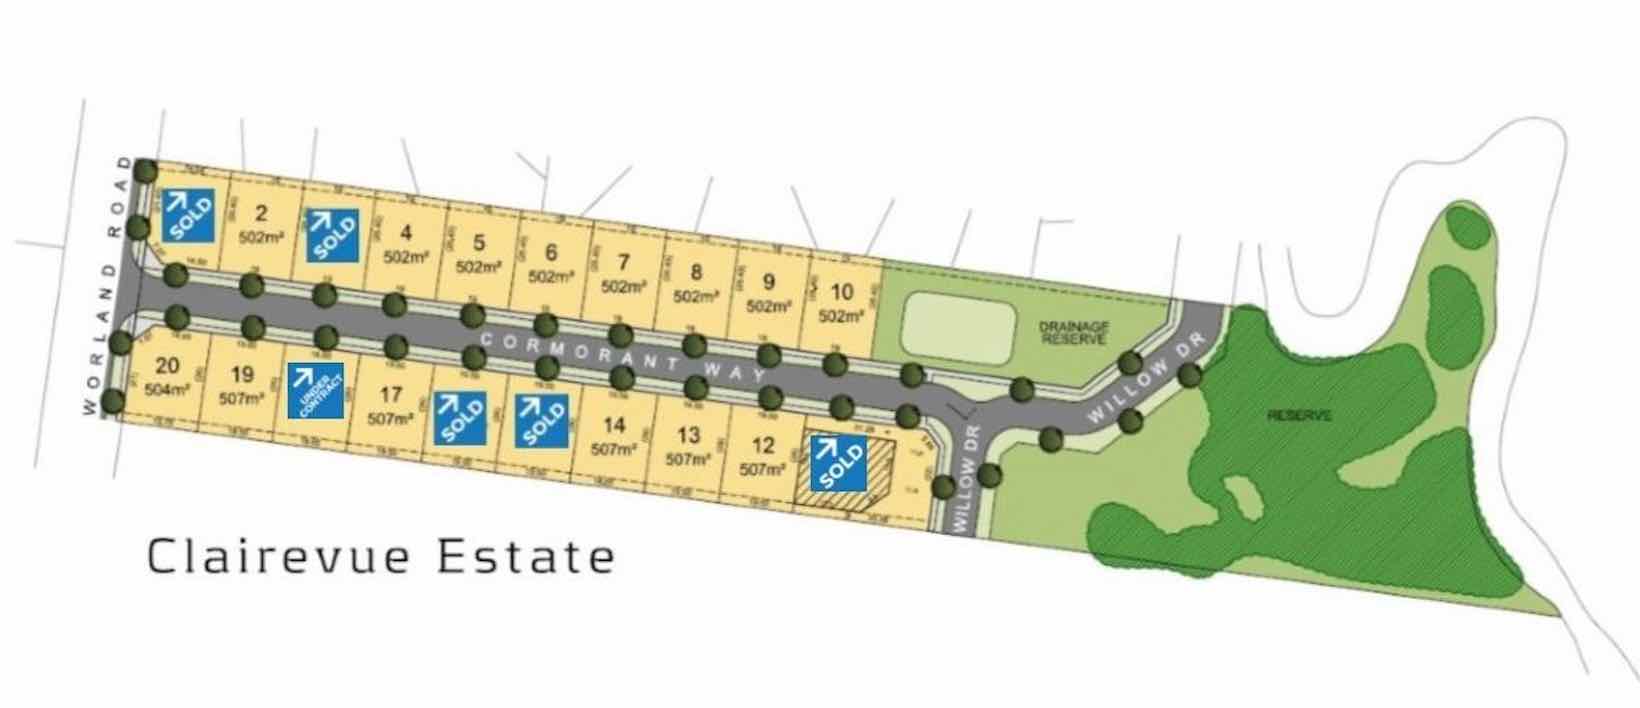 Clairevue Estate - Wangaratta Masterplan